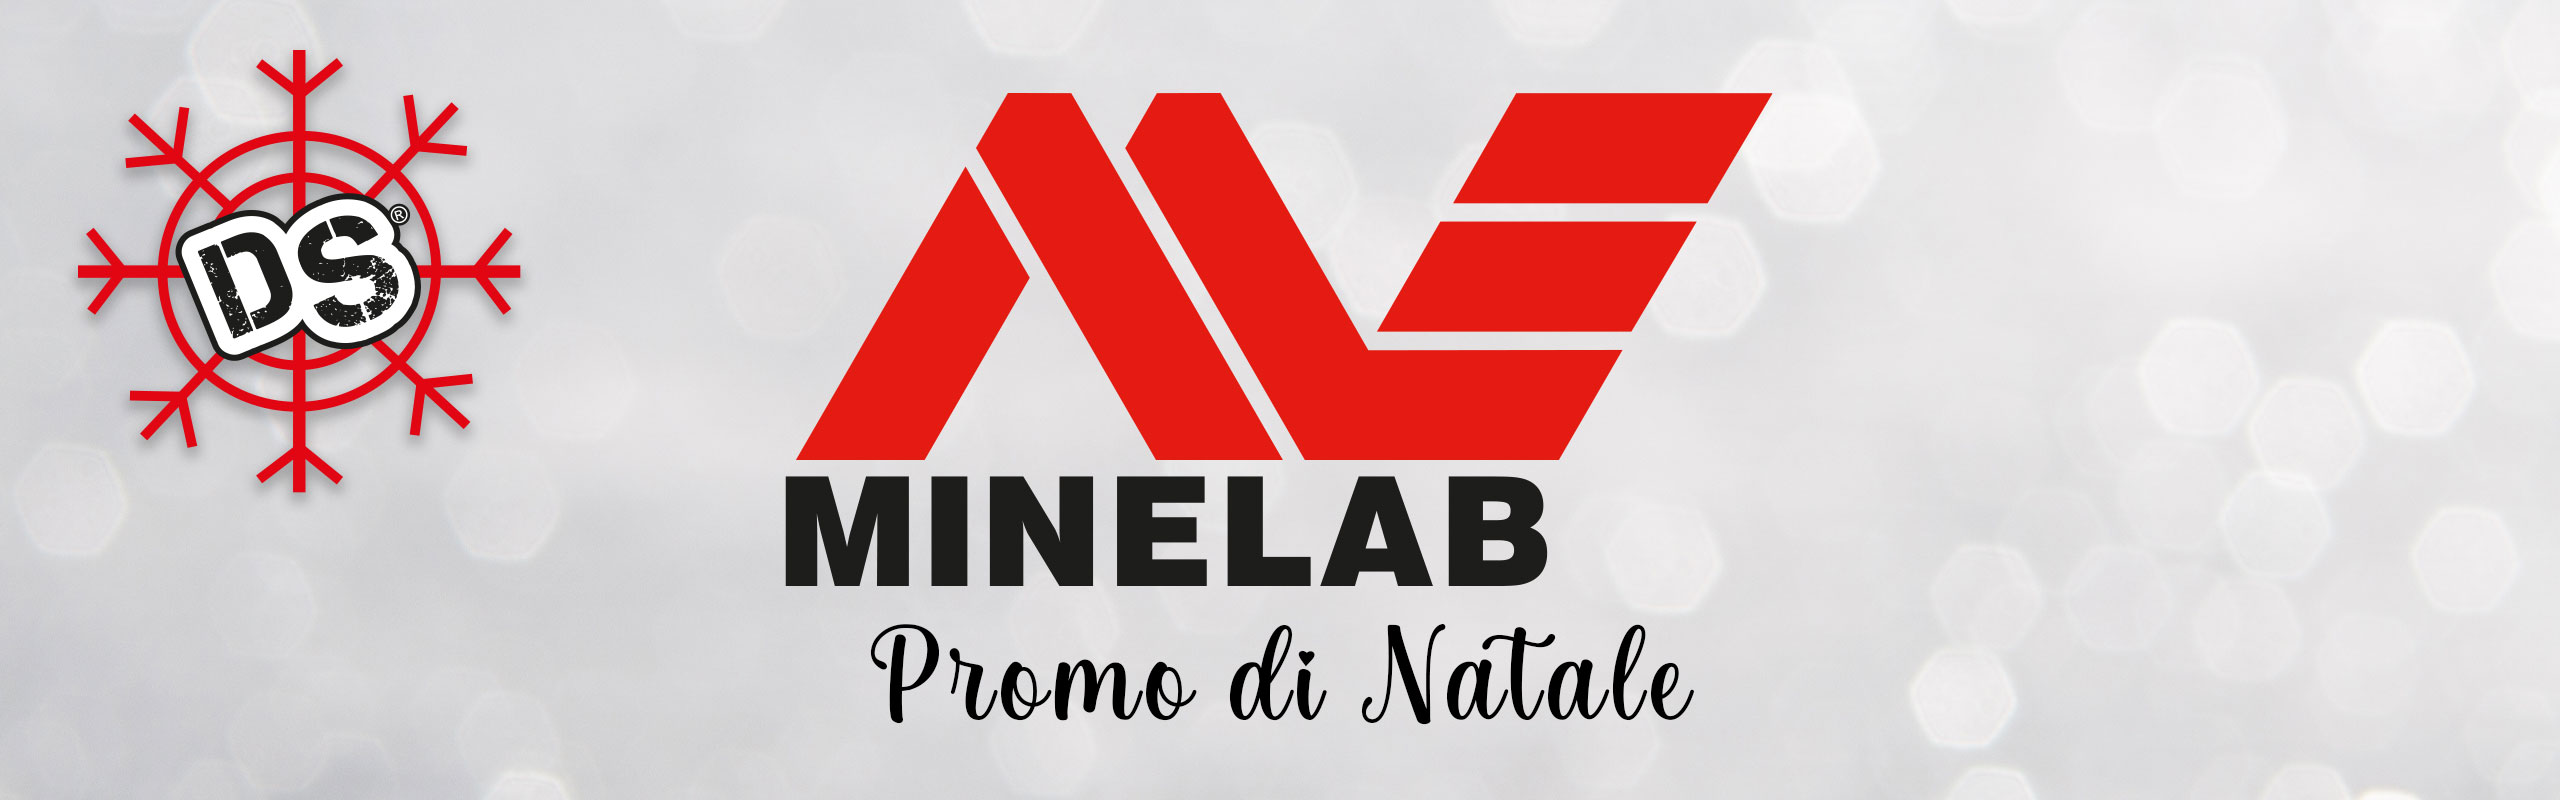 Promo Minelab